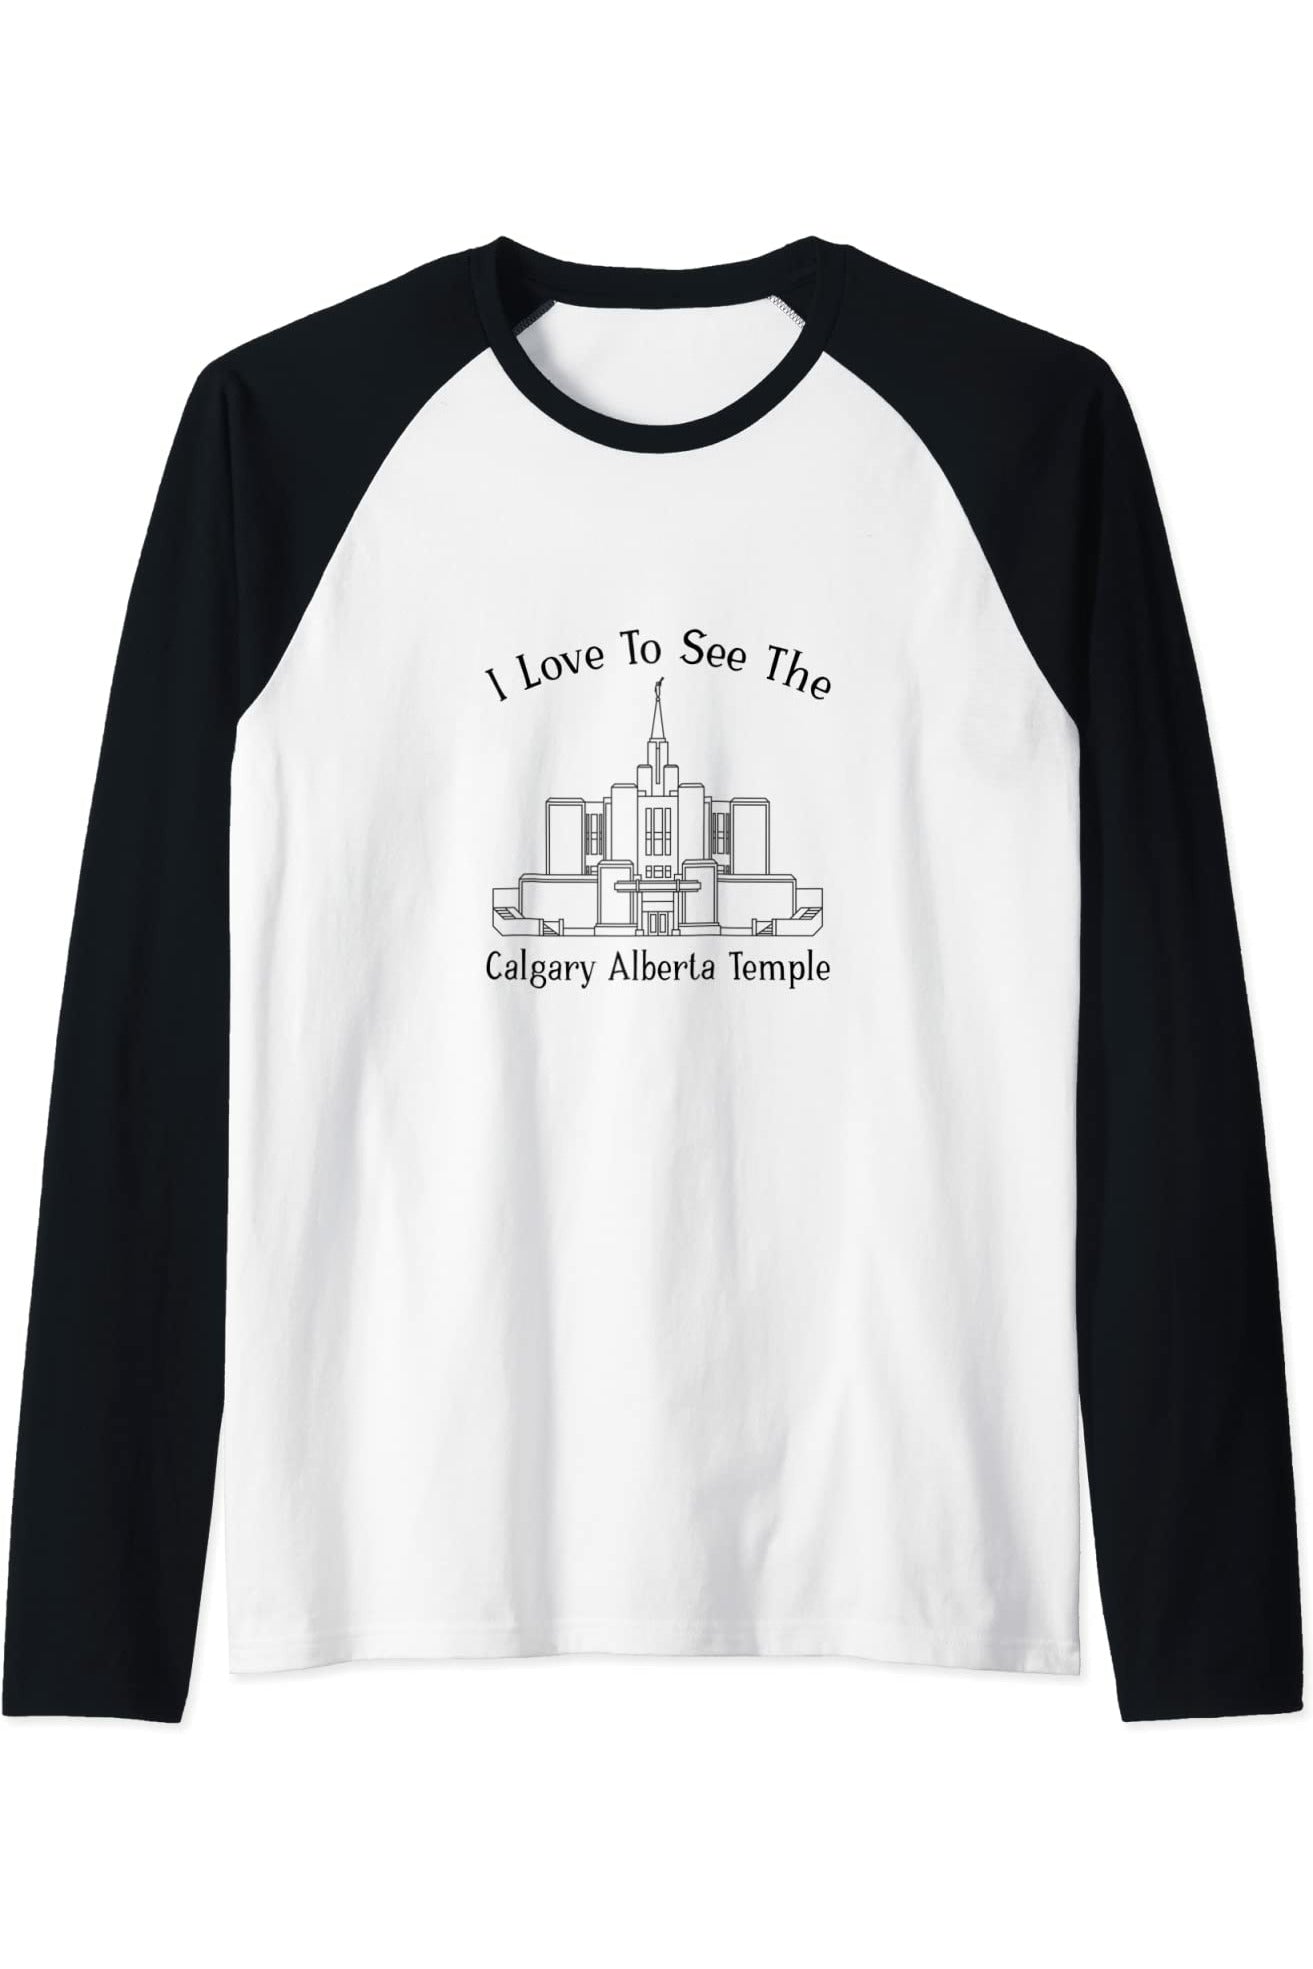 Calgary Alberta Temple Raglan - Happy Style (English) US